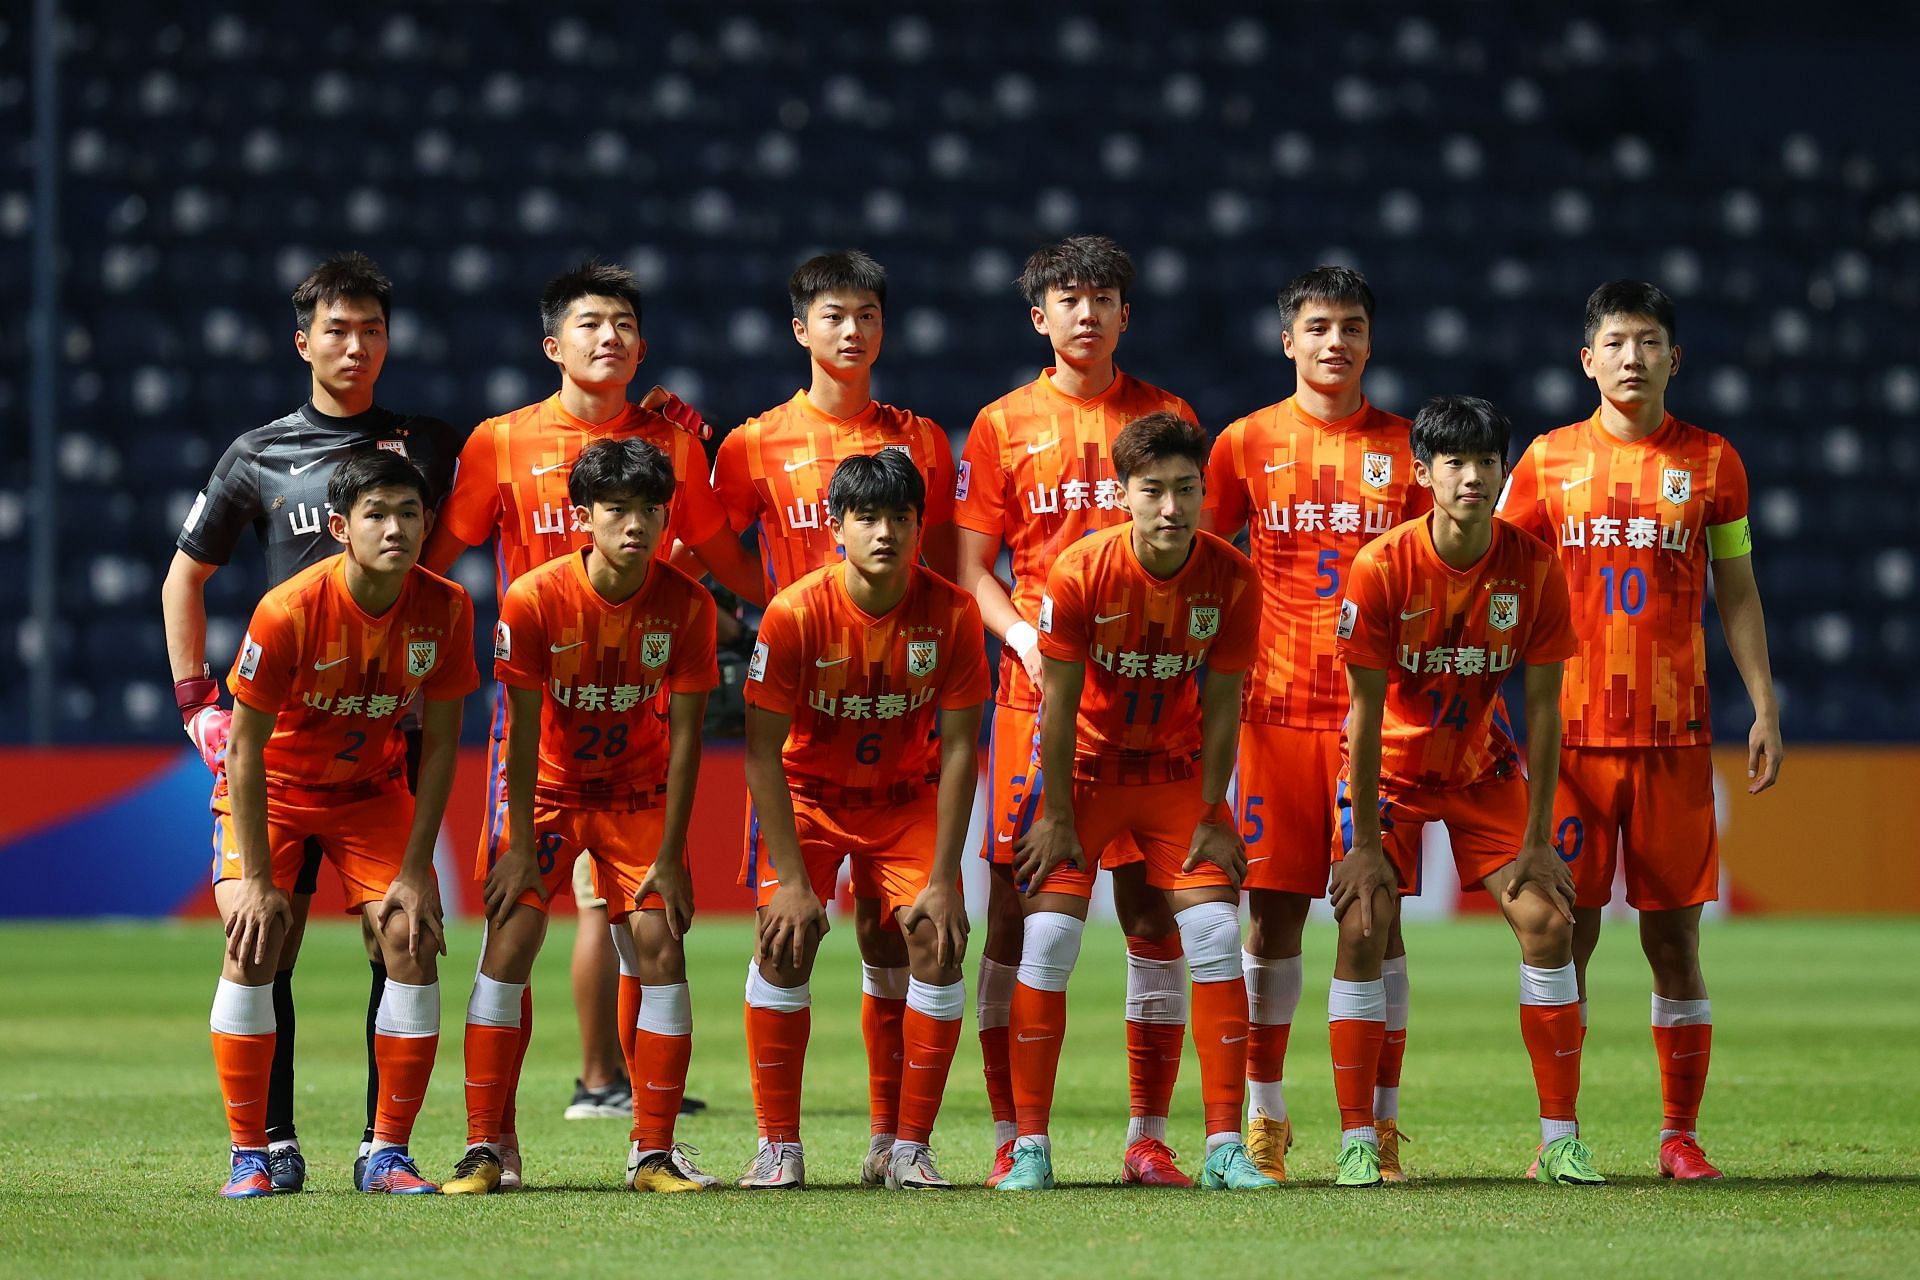 Shandong Taishan are set to play Dalian Pro on Tuesday